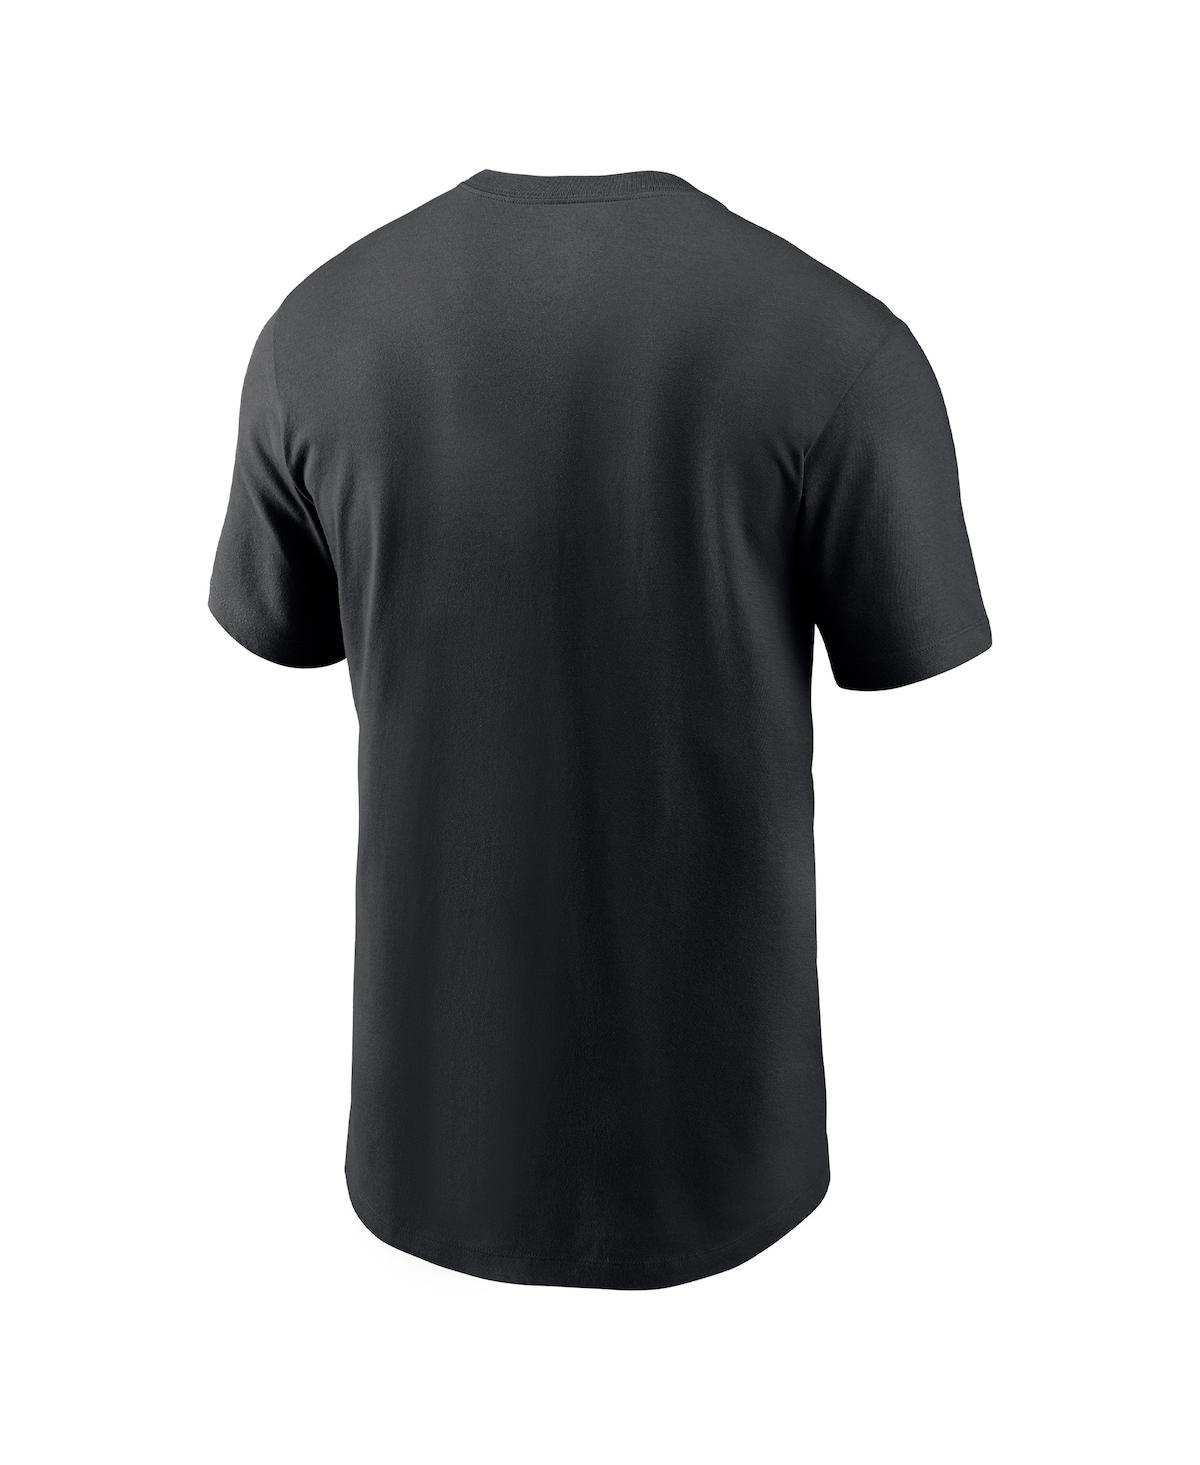 Shop Nike Men's  Roberto Clemente Black Pittsburgh Pirates Commemorative T-shirt